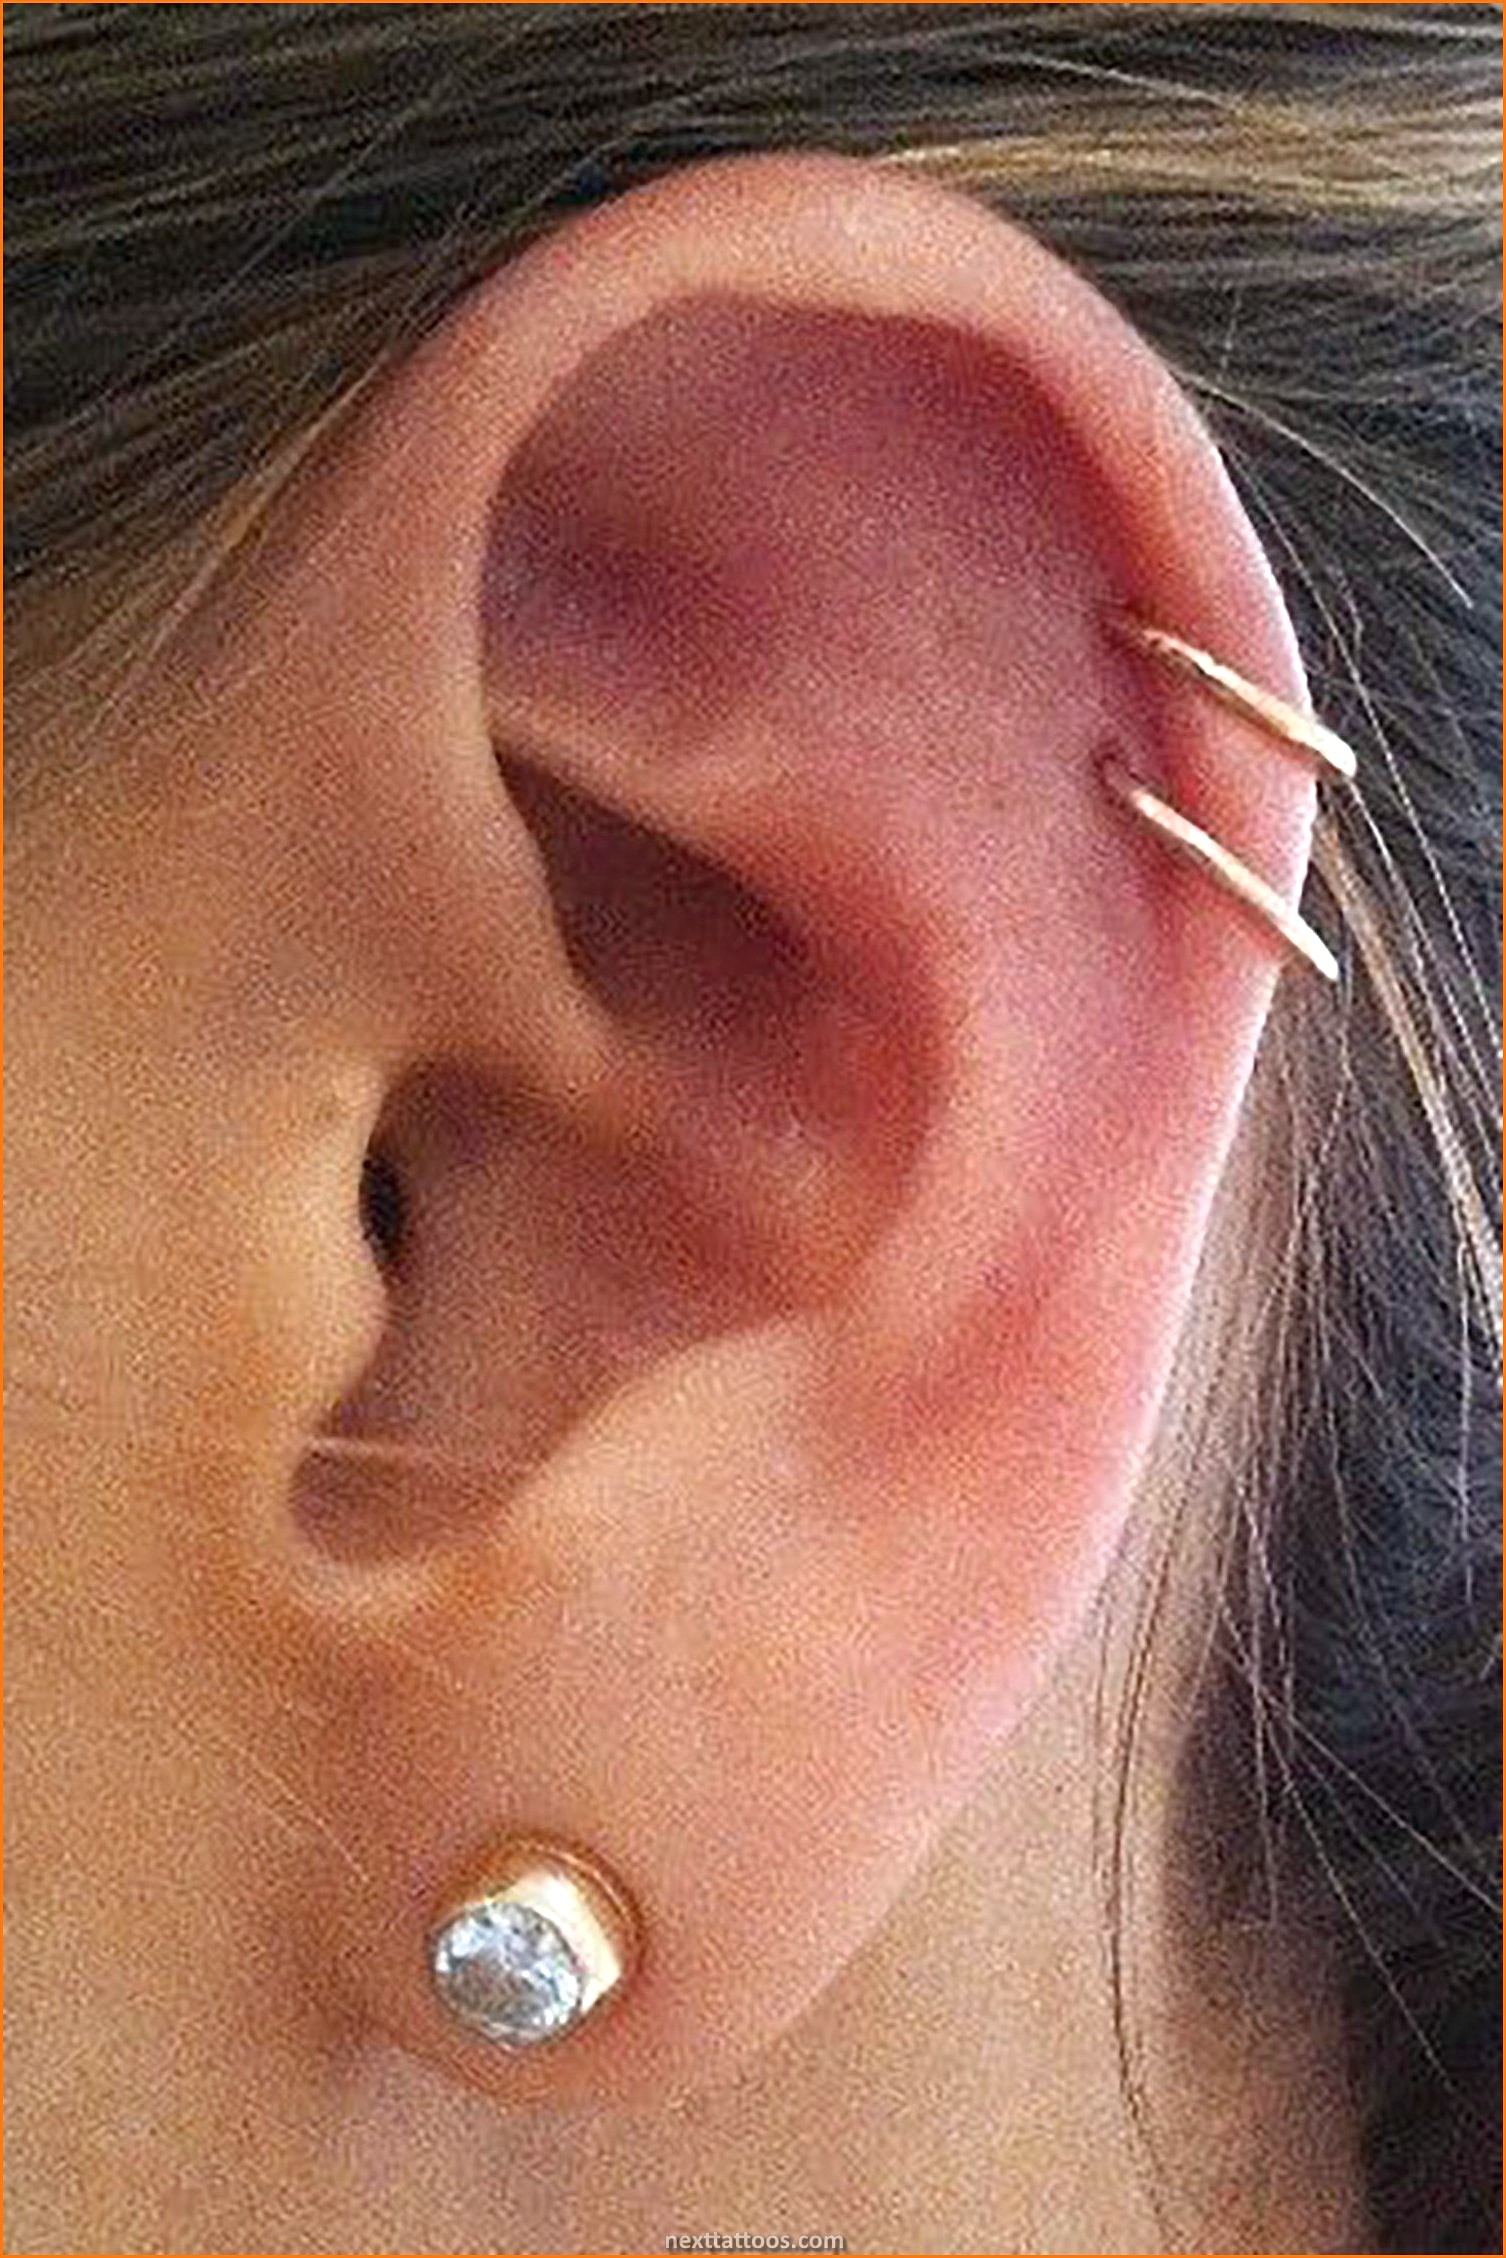 Top 5 Cartilage Ear Piercing Ideas